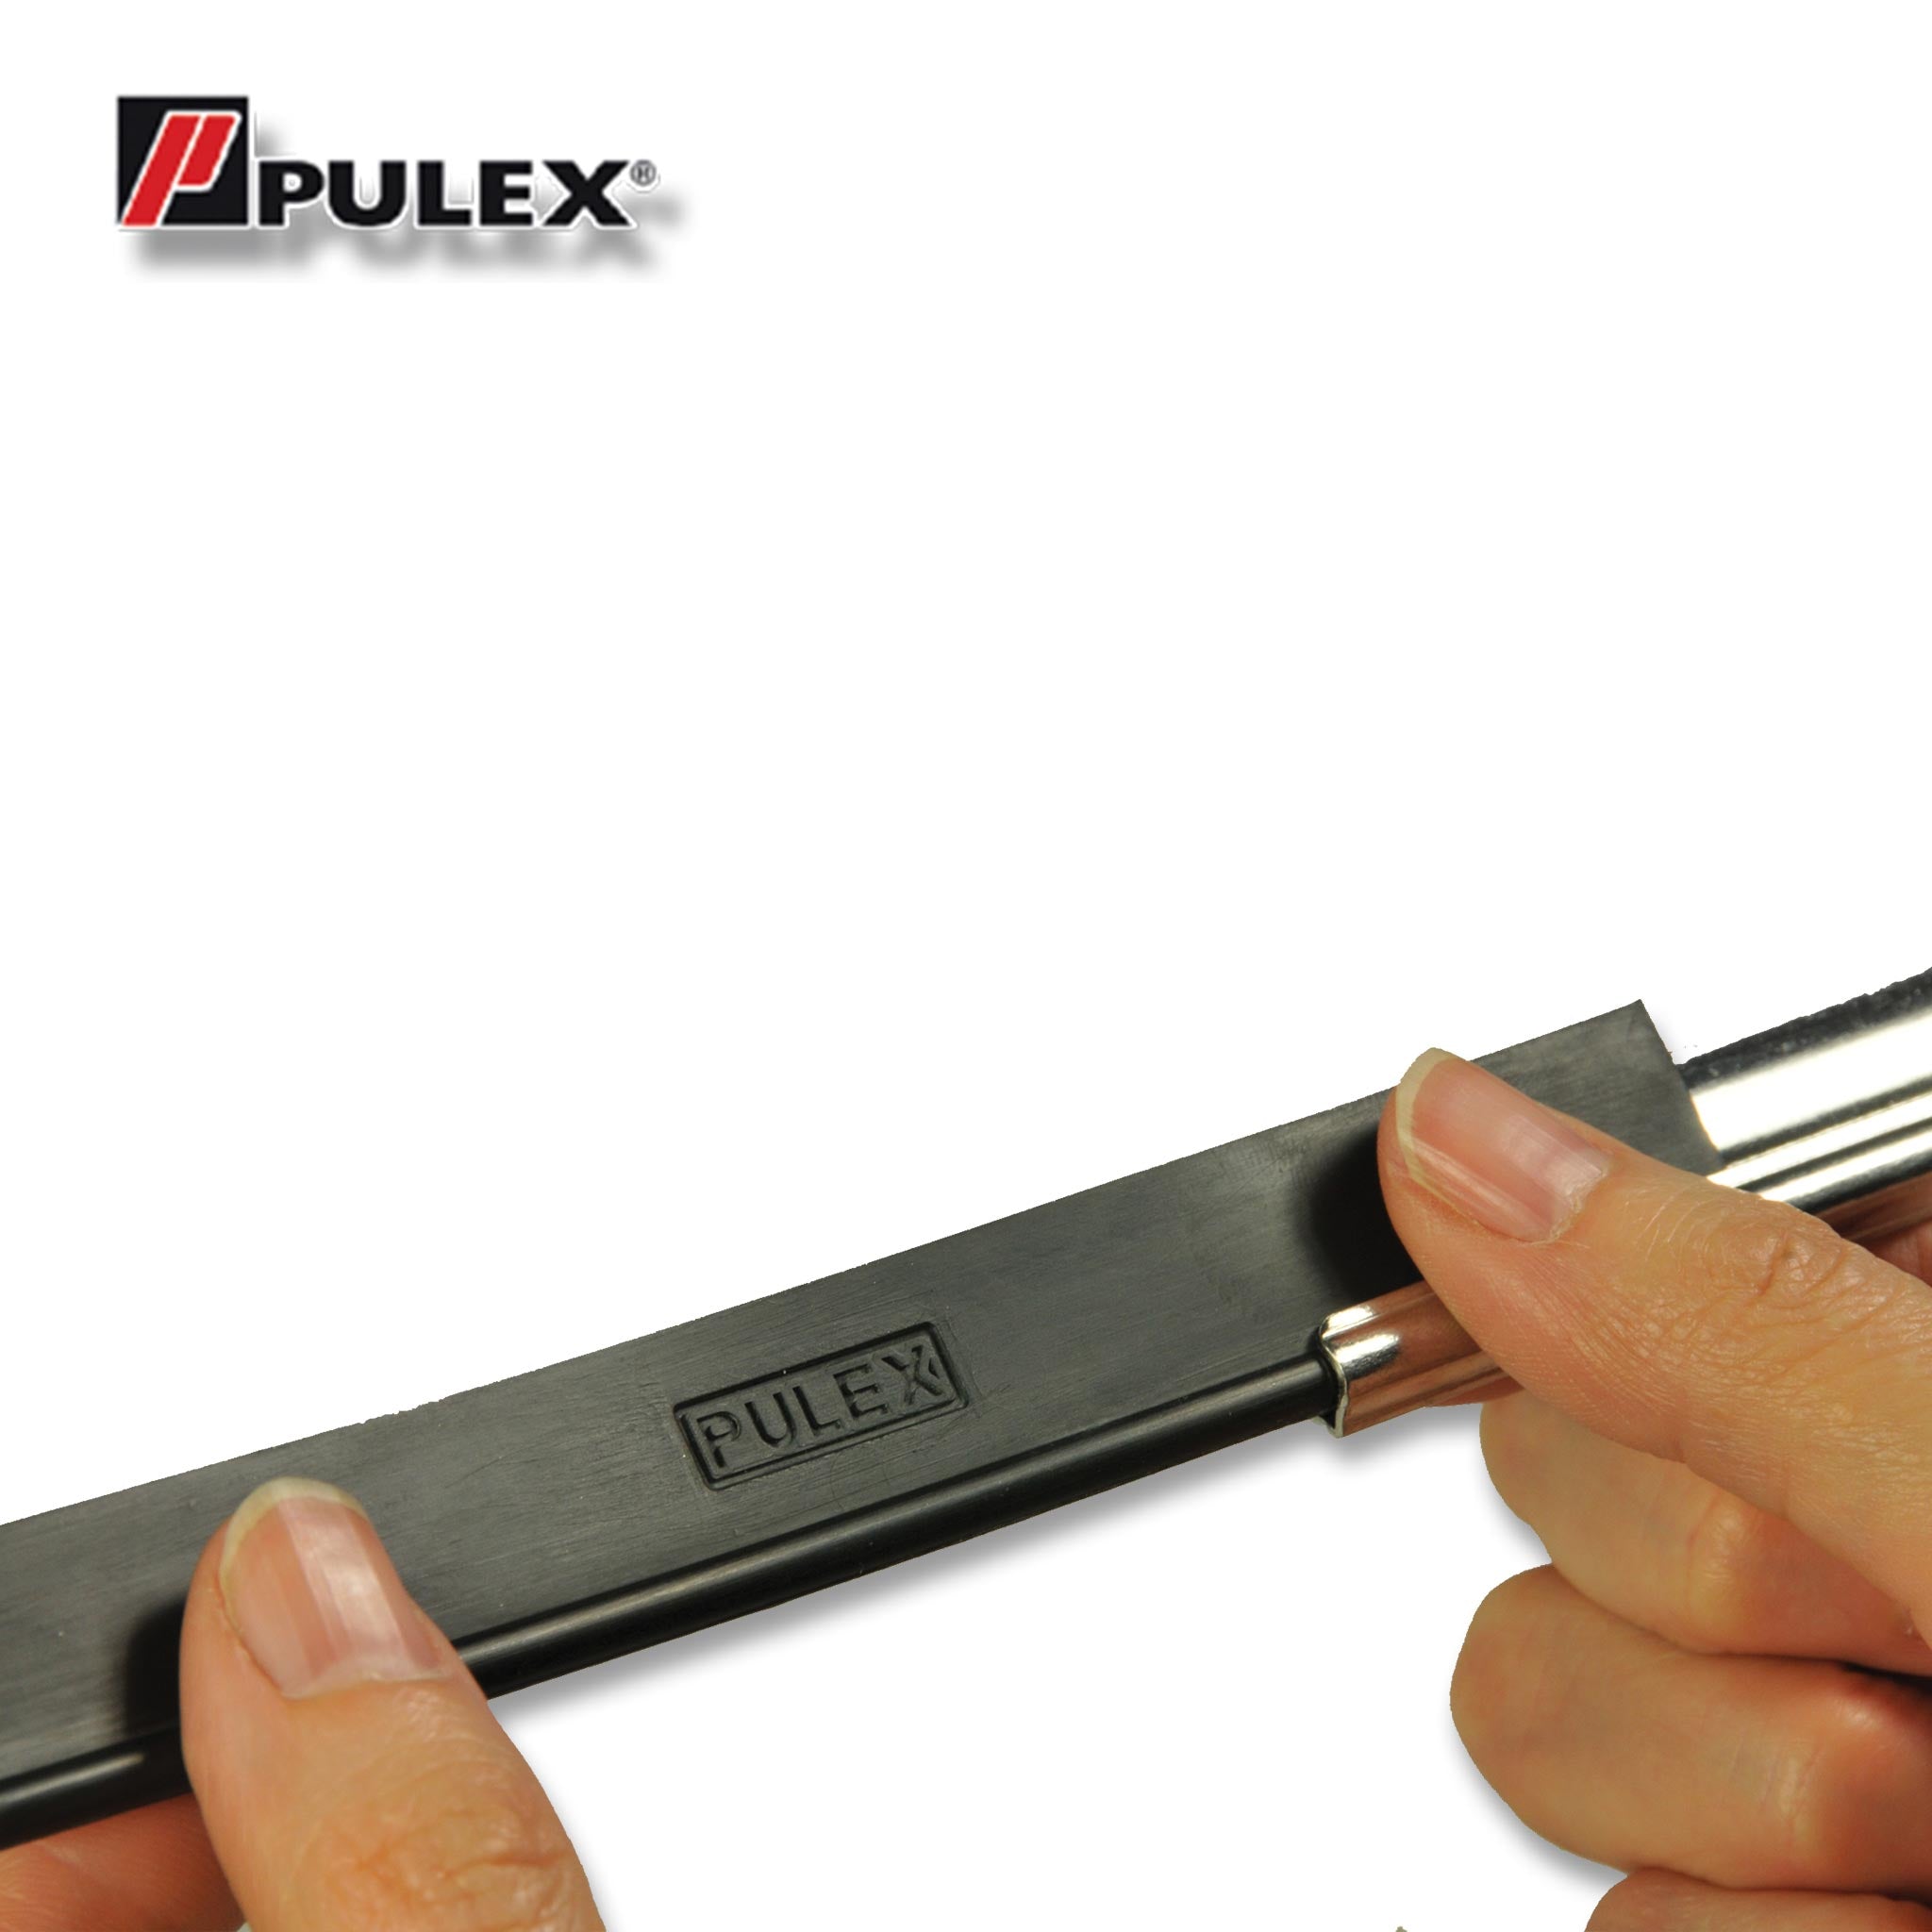 Pulex Rubber - Hard Compound